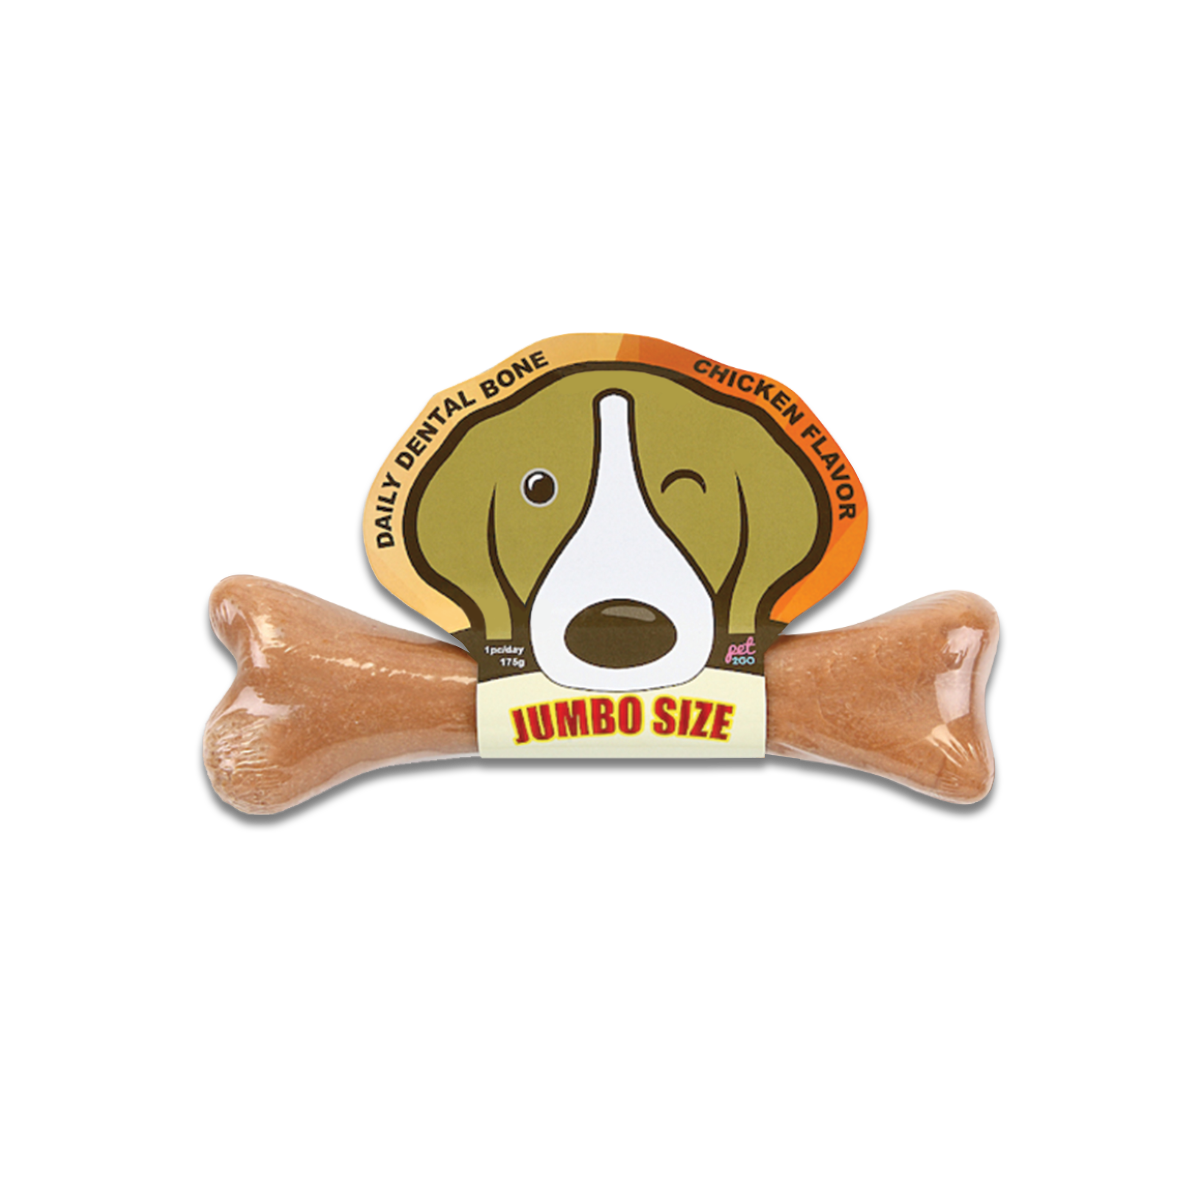 Daily Dental Bone Jumbo Size Chicken Flavor เดลี่ เดนทัลโบน ขนมขัดฟันสุนัข จัมโบ้ รสไก่ ขนาด 175 กรัม